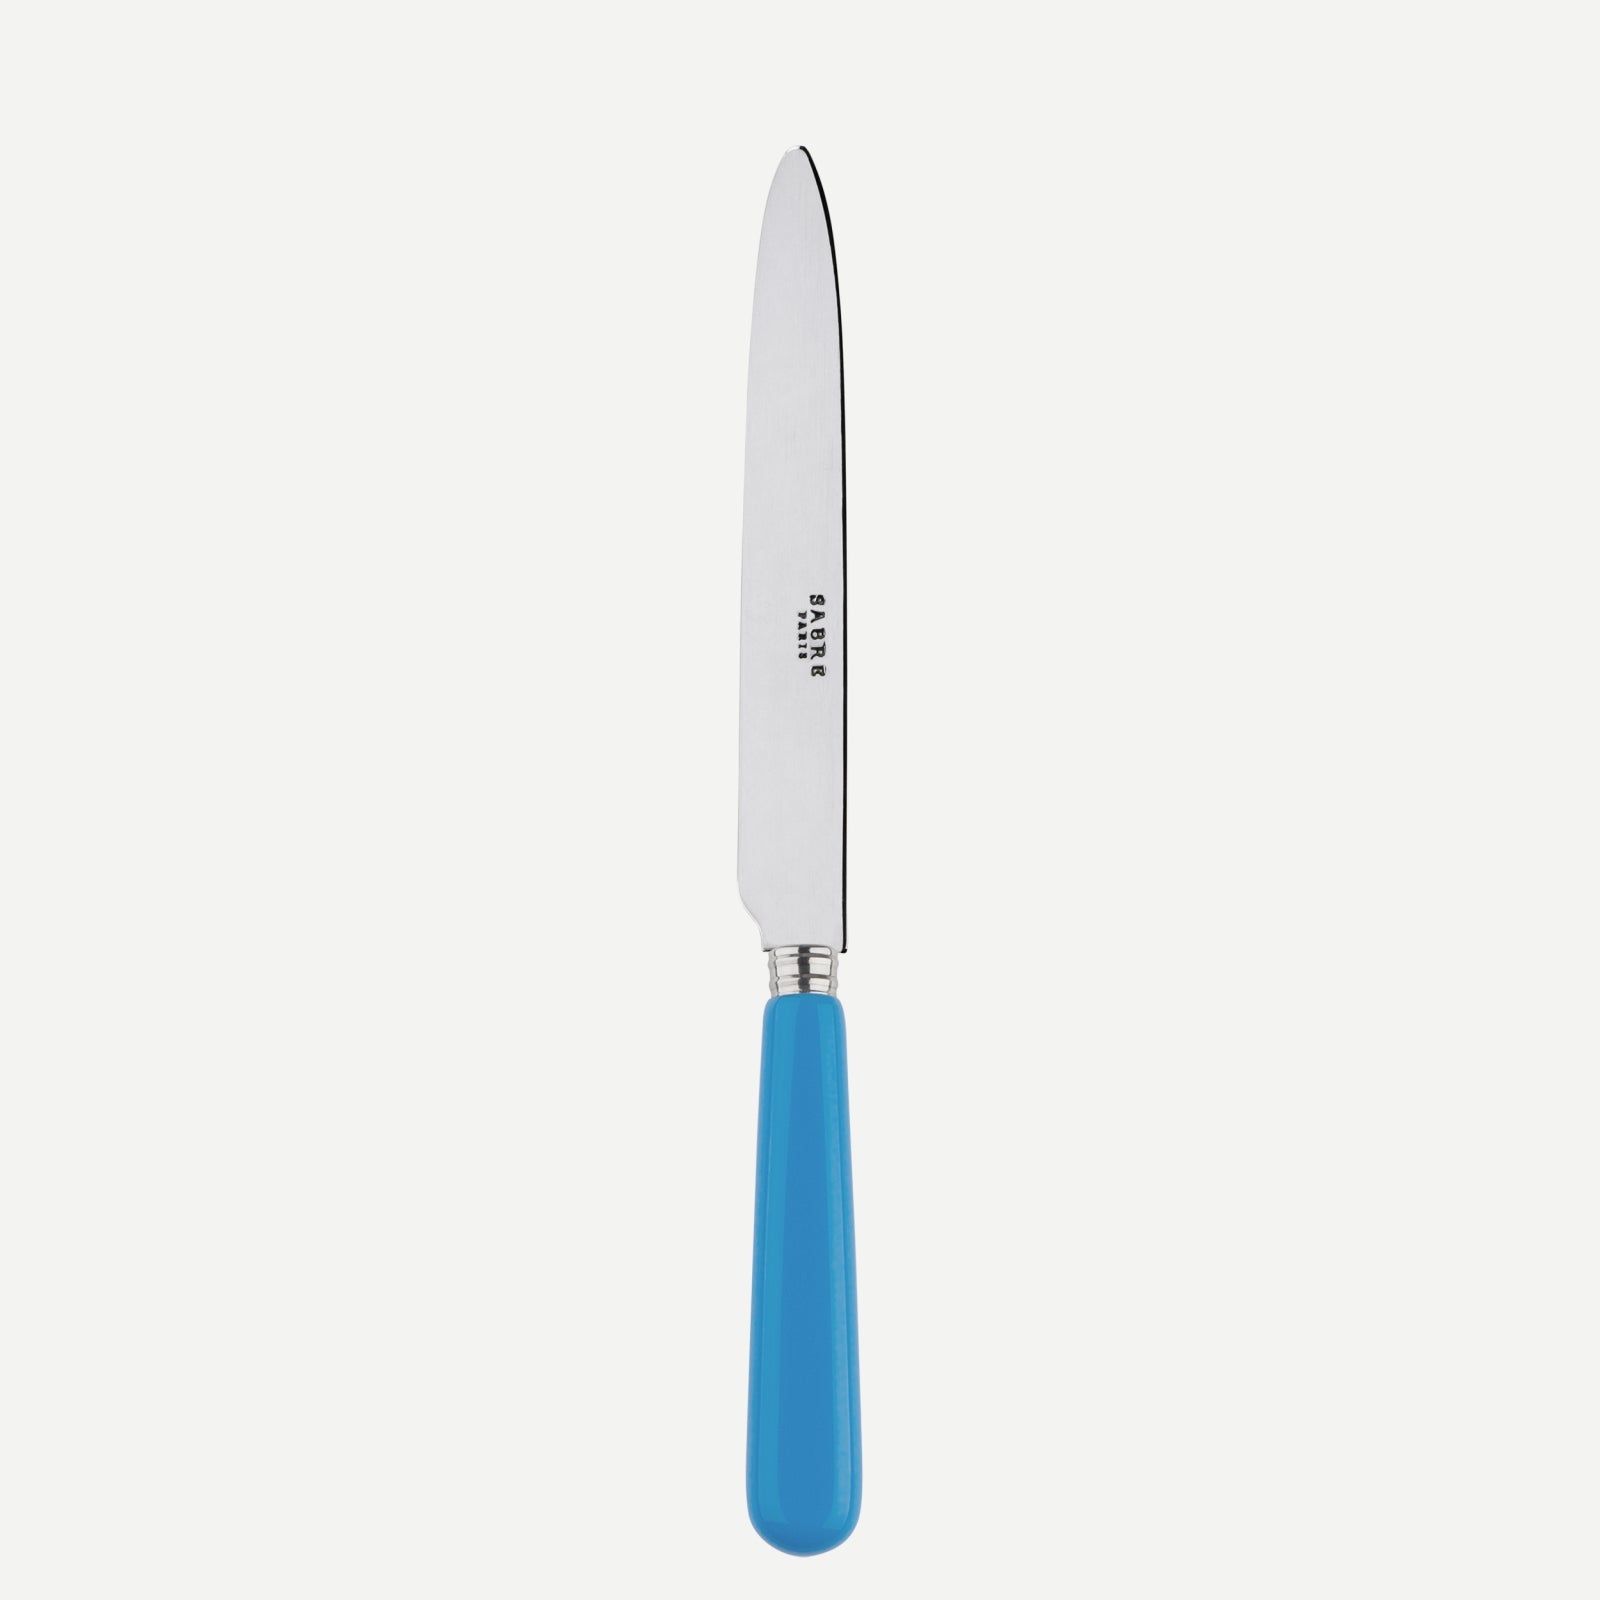 Dinner knife - Pop unis - Cerulean blue